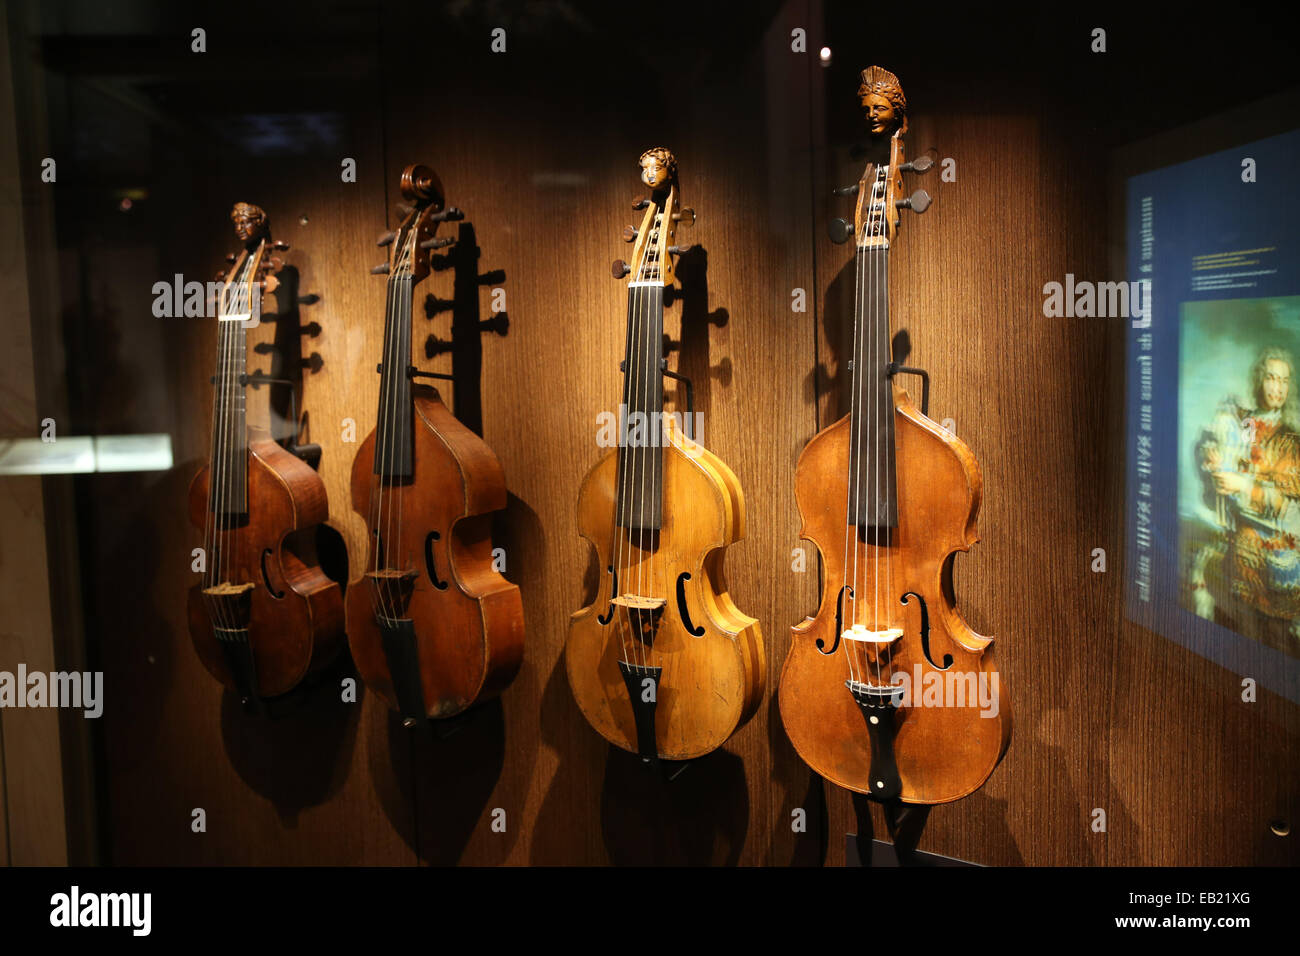 various violins display inside museum Stock Photo